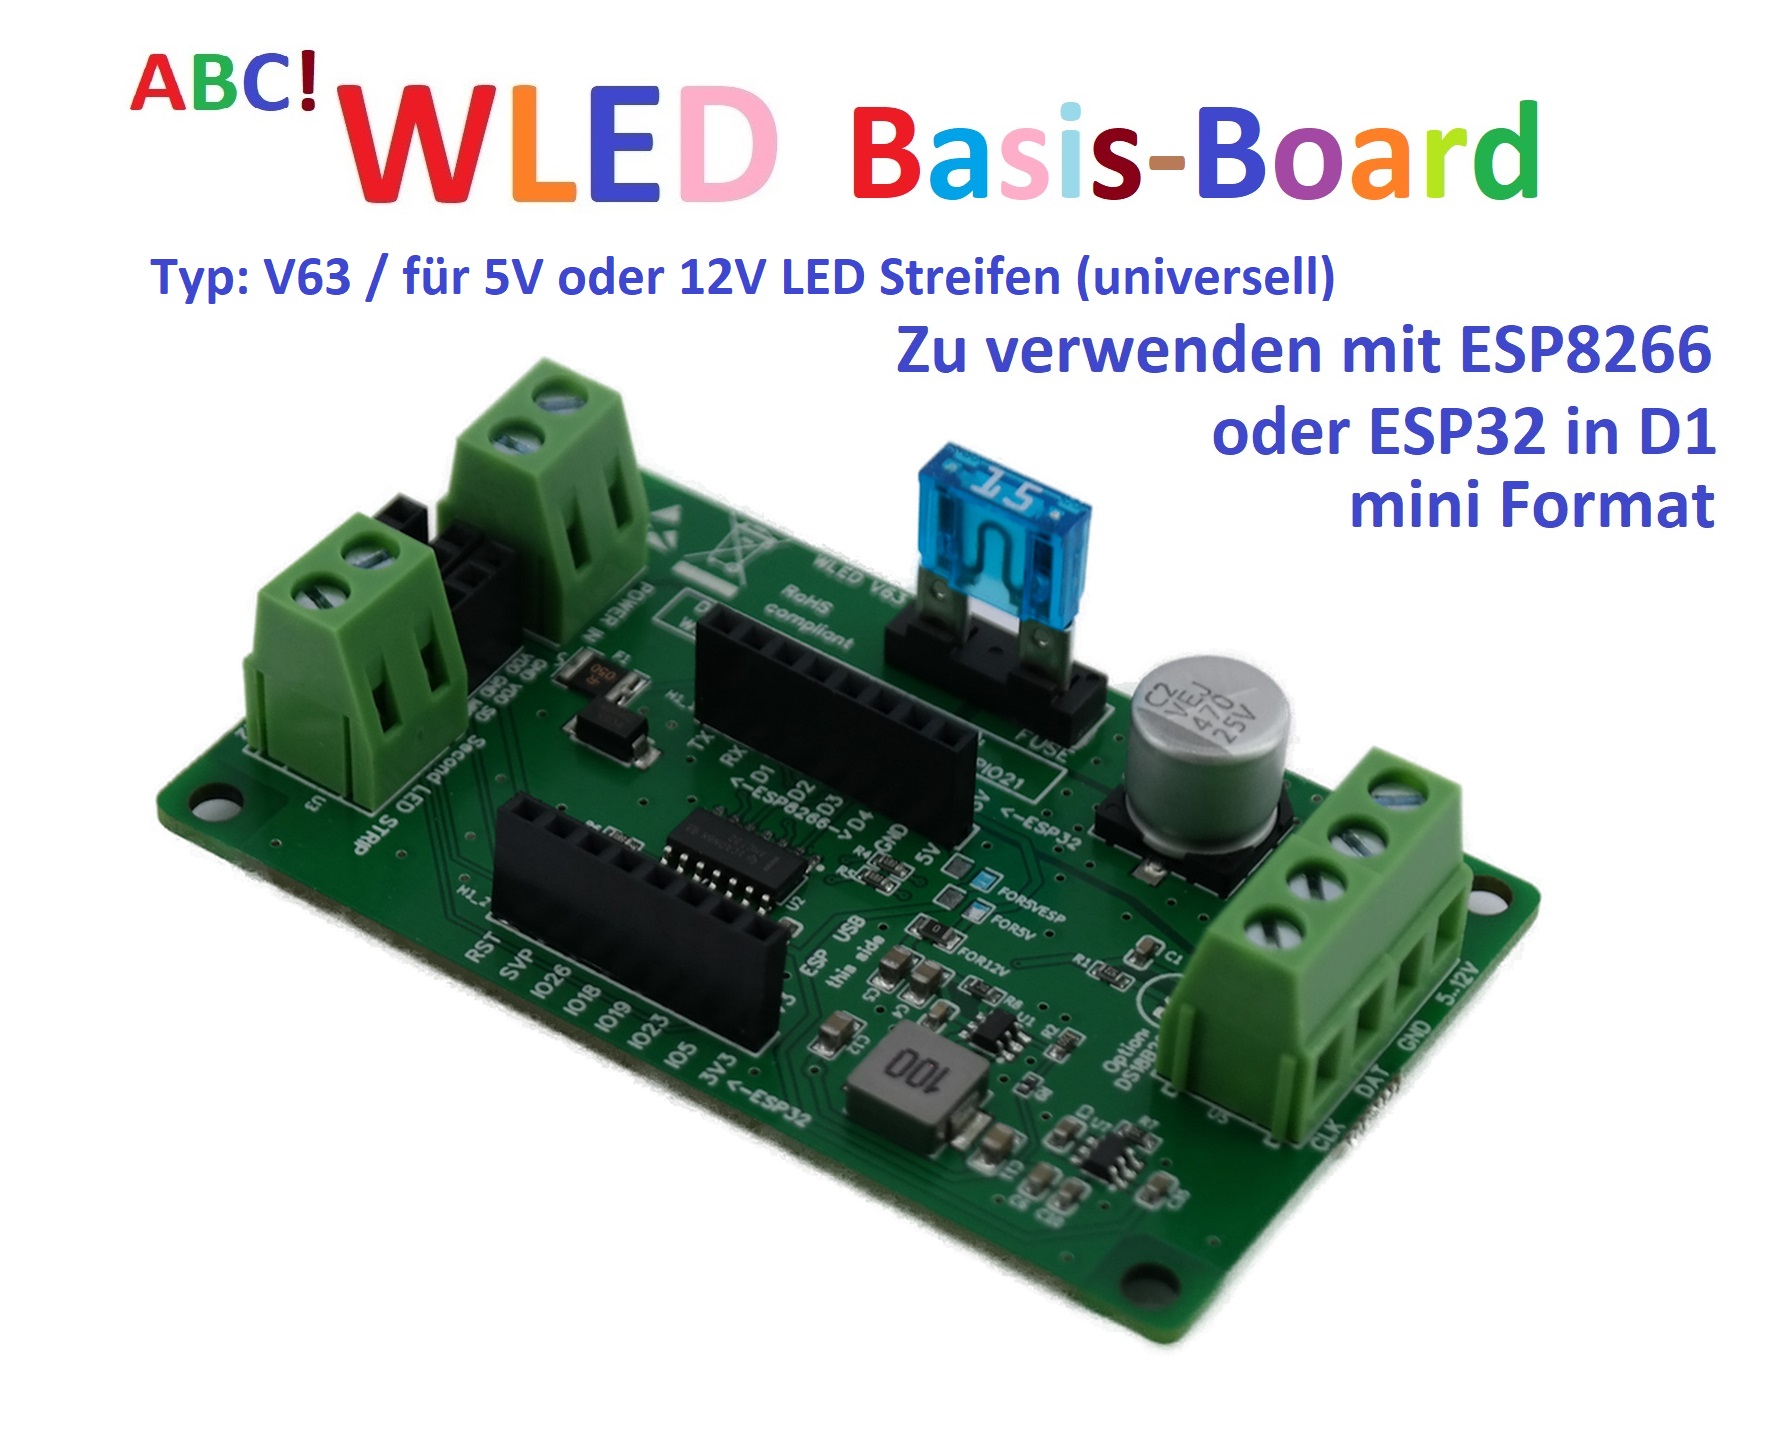 ABC! WLED Basis-Board für 5V und 12V LED (universell, V63)